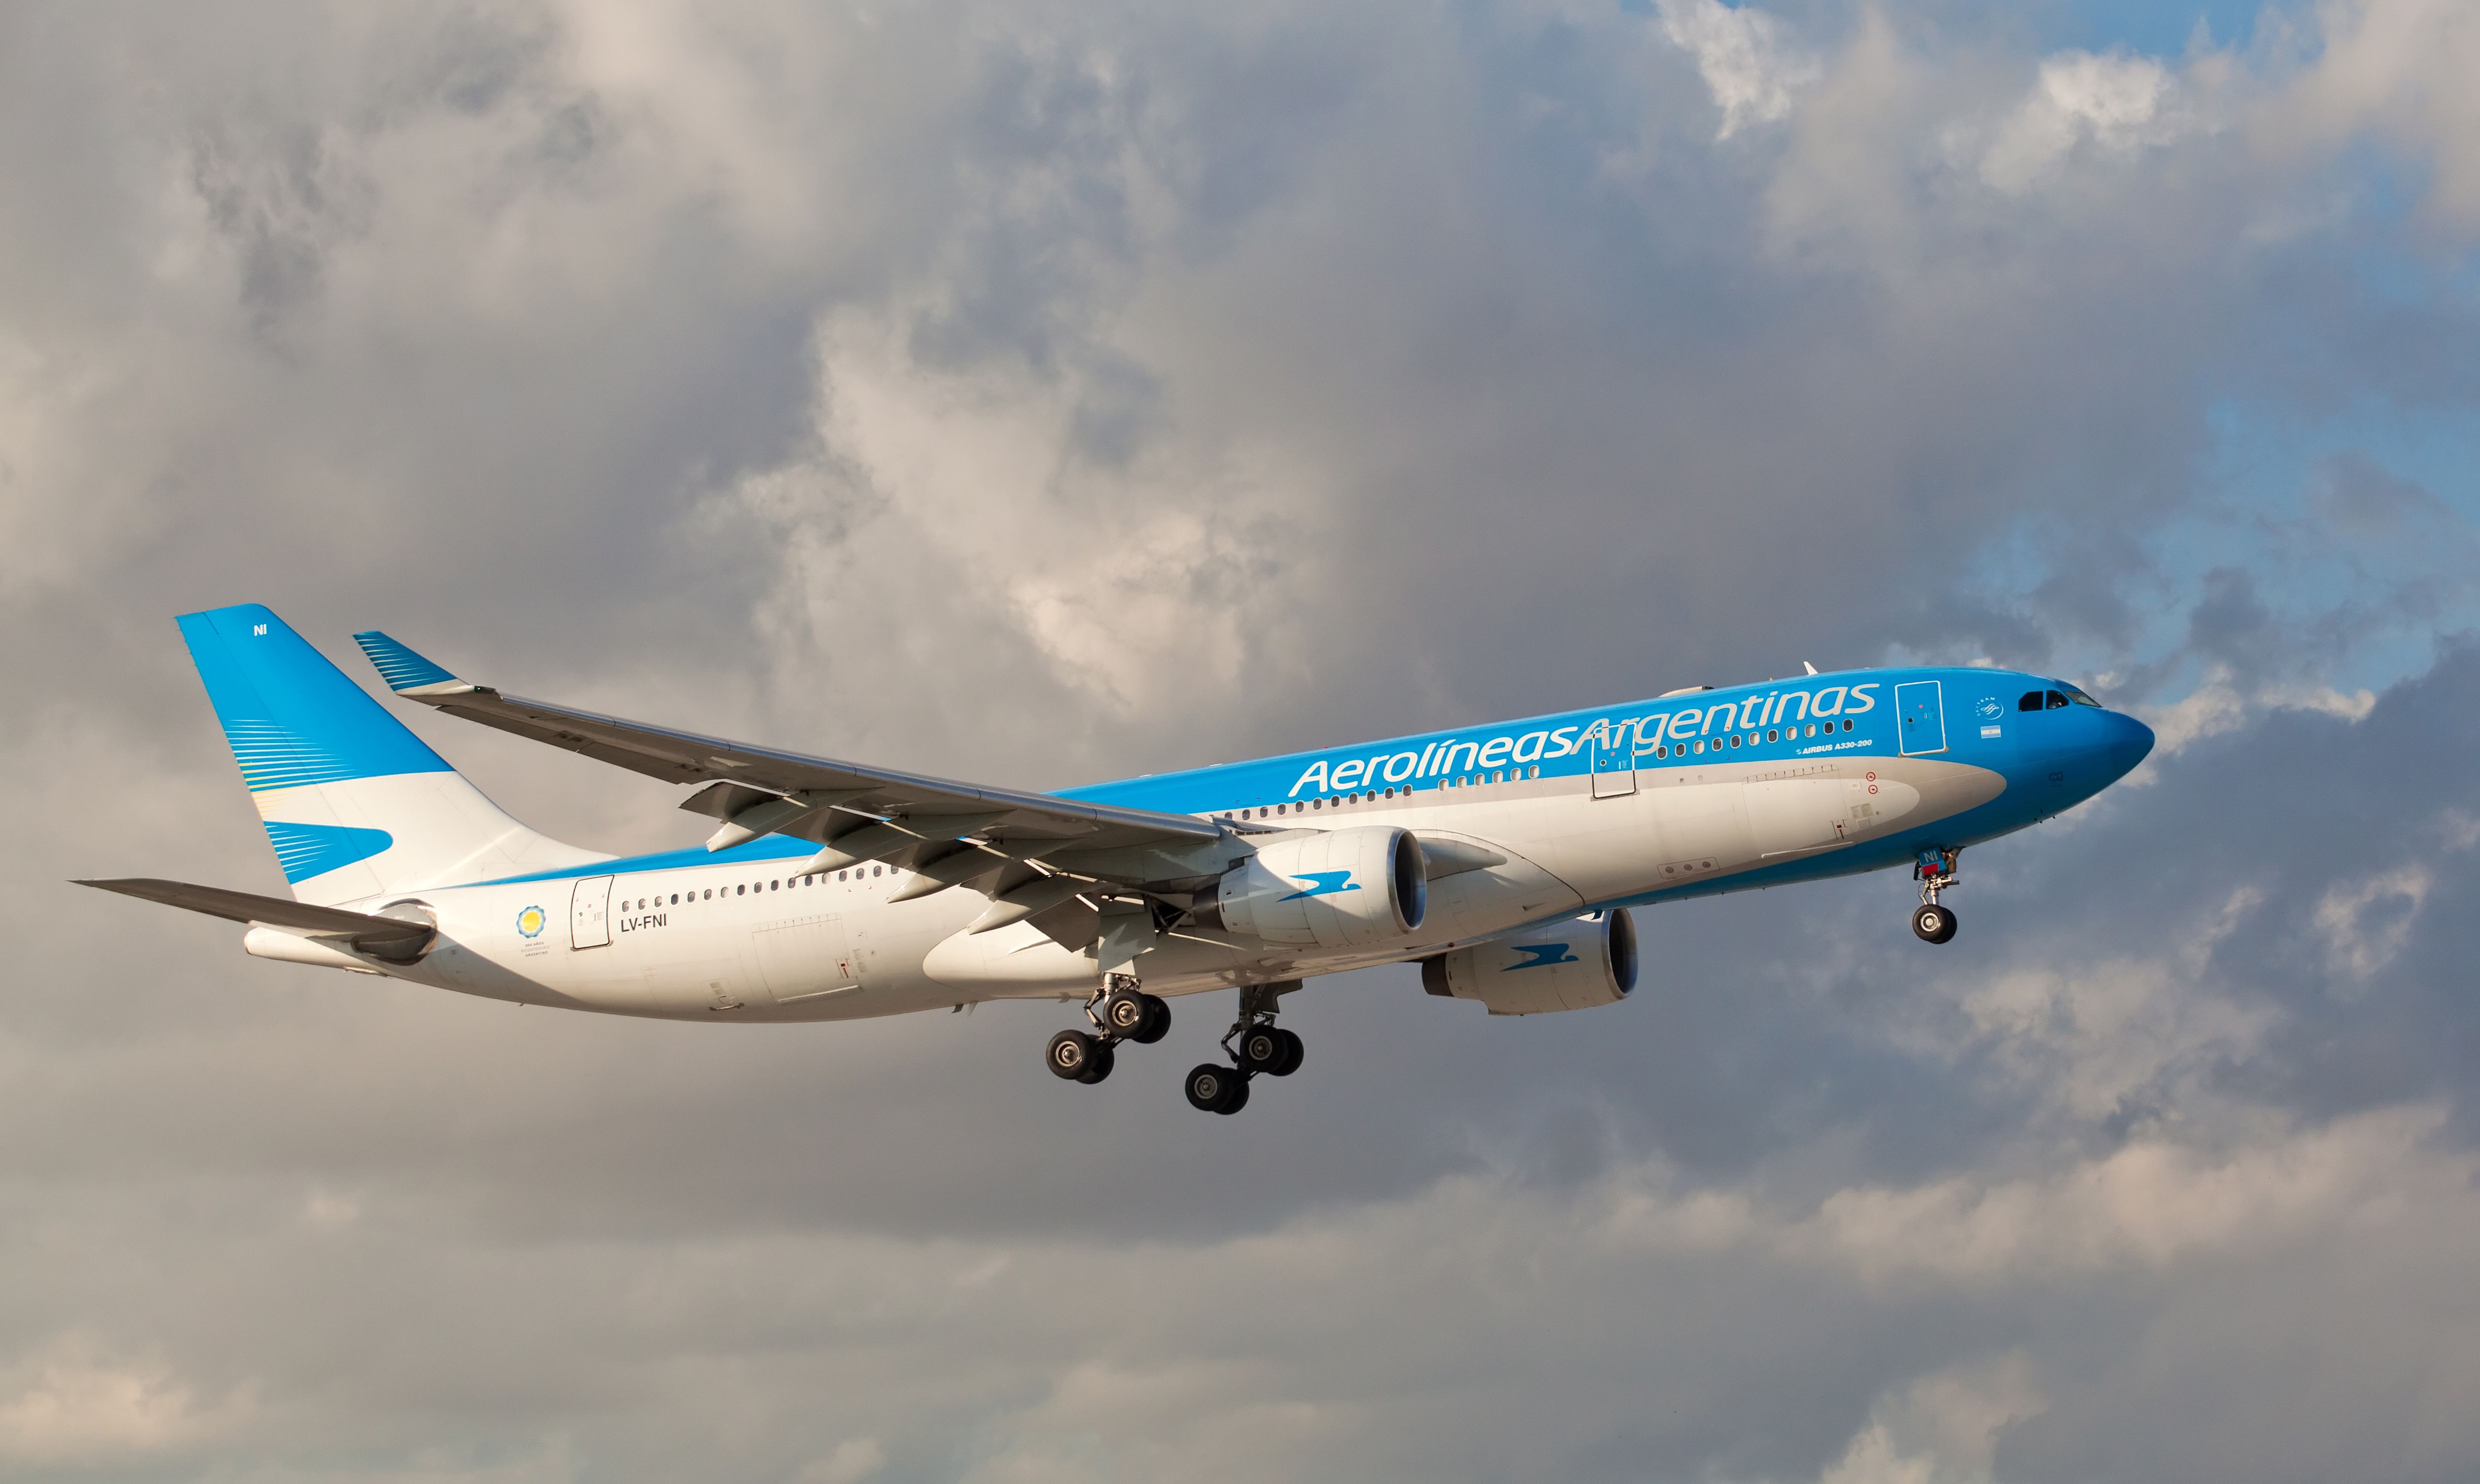 Aerolineas Argentinas Airbus-330 landing at Miami International airport.-1